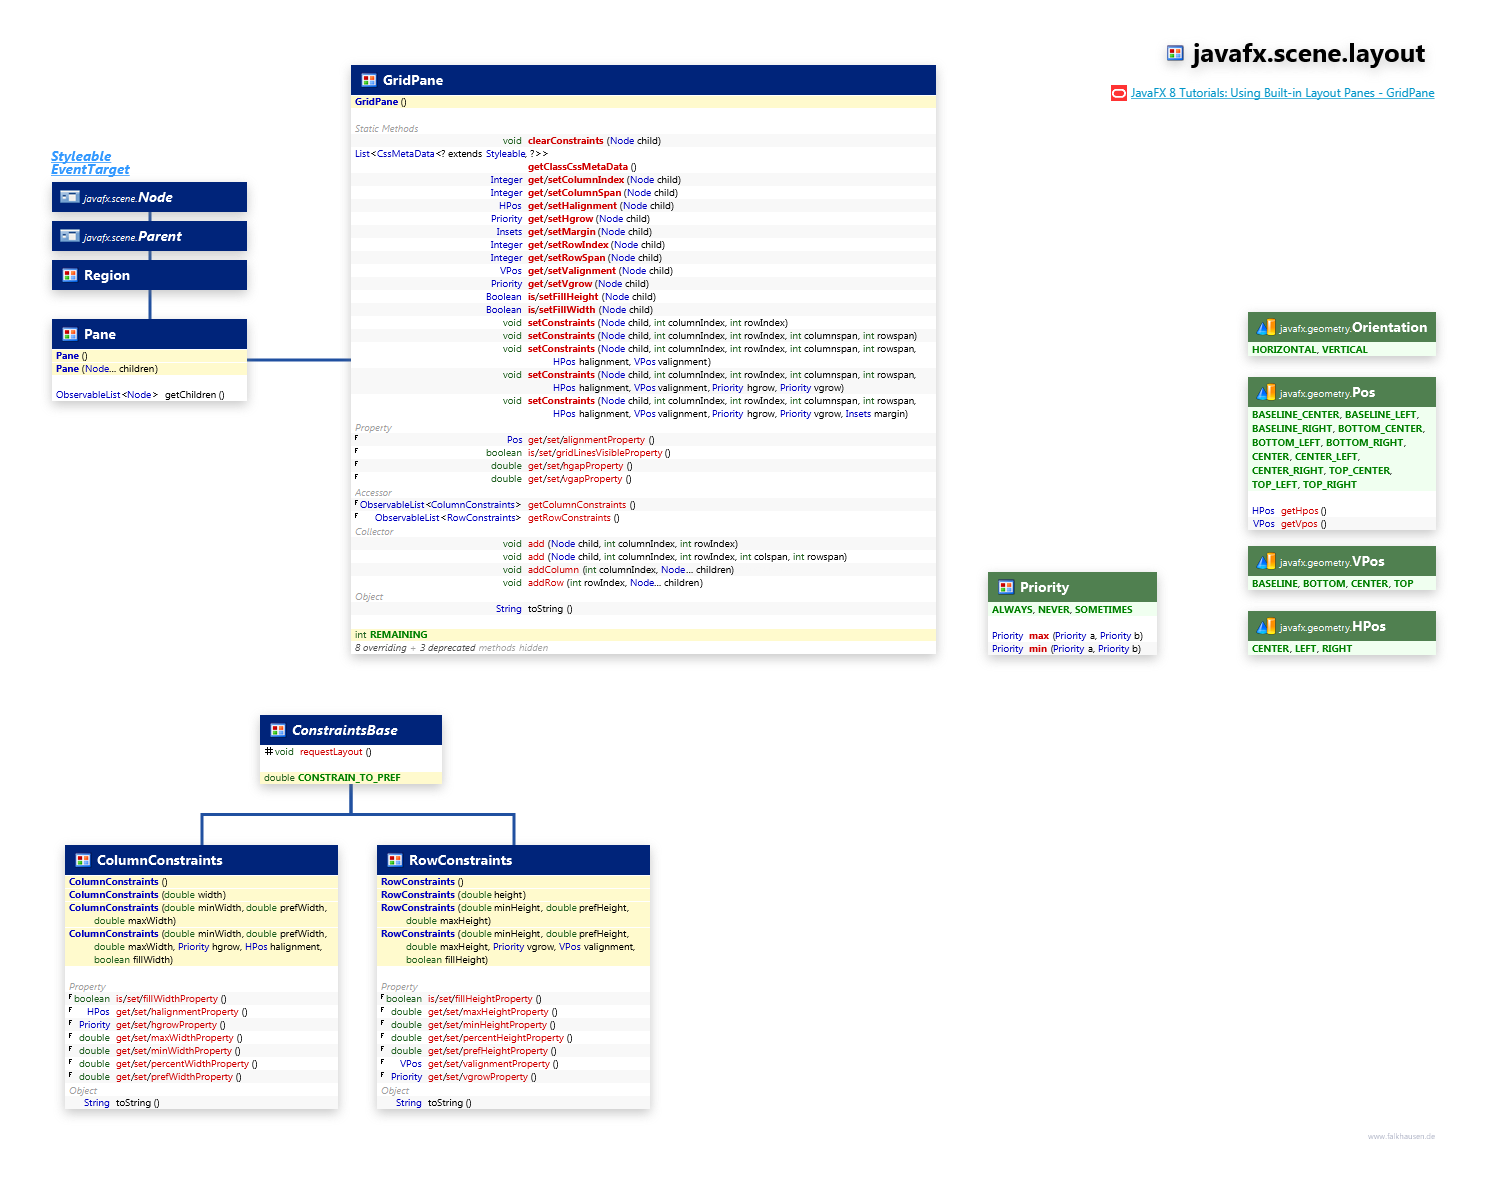 javafx.scene.layout GridPane class diagram and api documentation for JavaFX 8